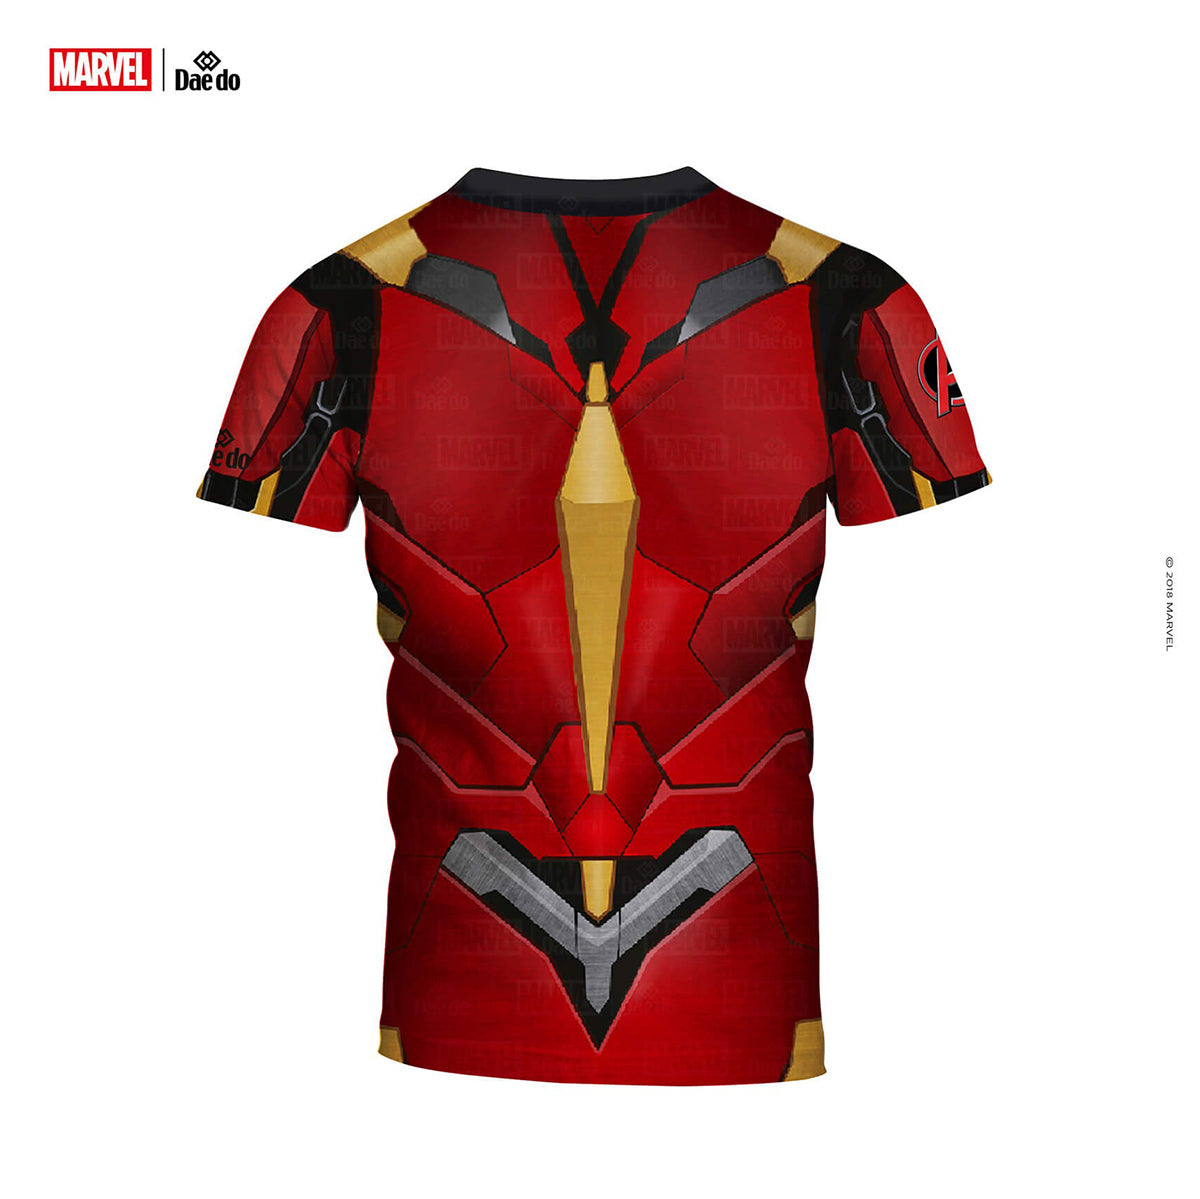 T-shirt imprimé Iron Man Daedo, MARV52101 